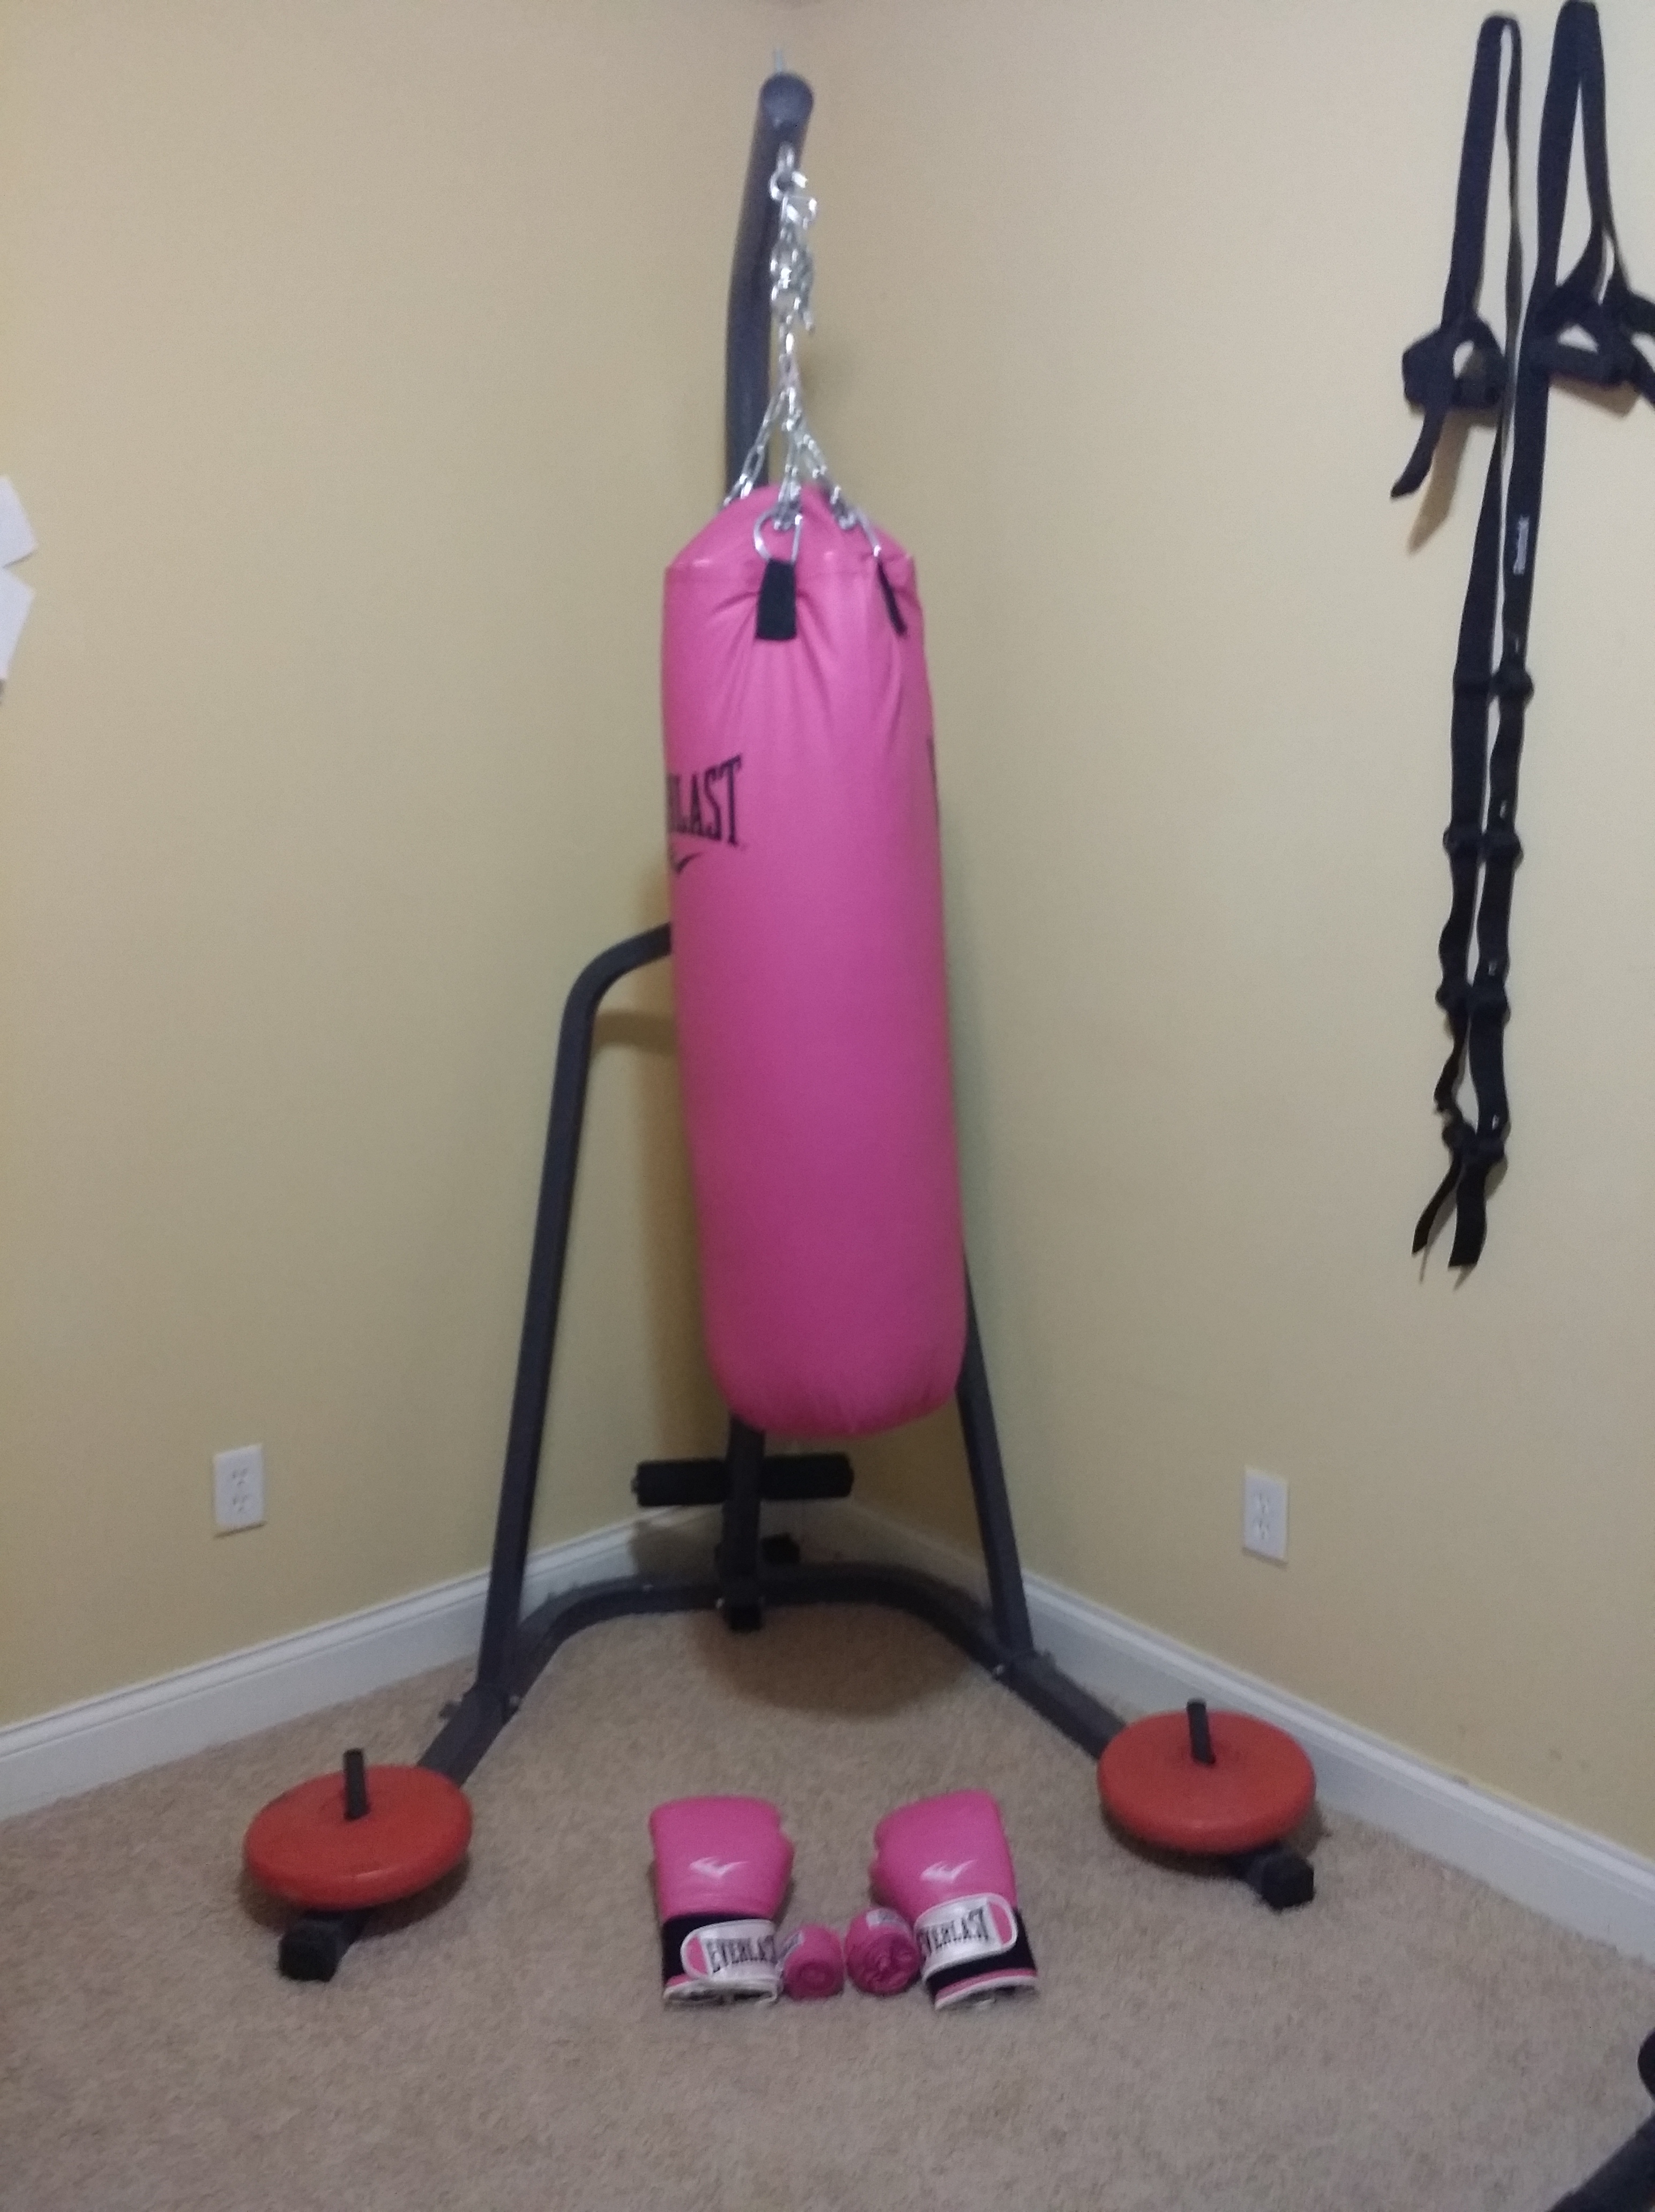 My Home Workout Equipment – JustRobbin